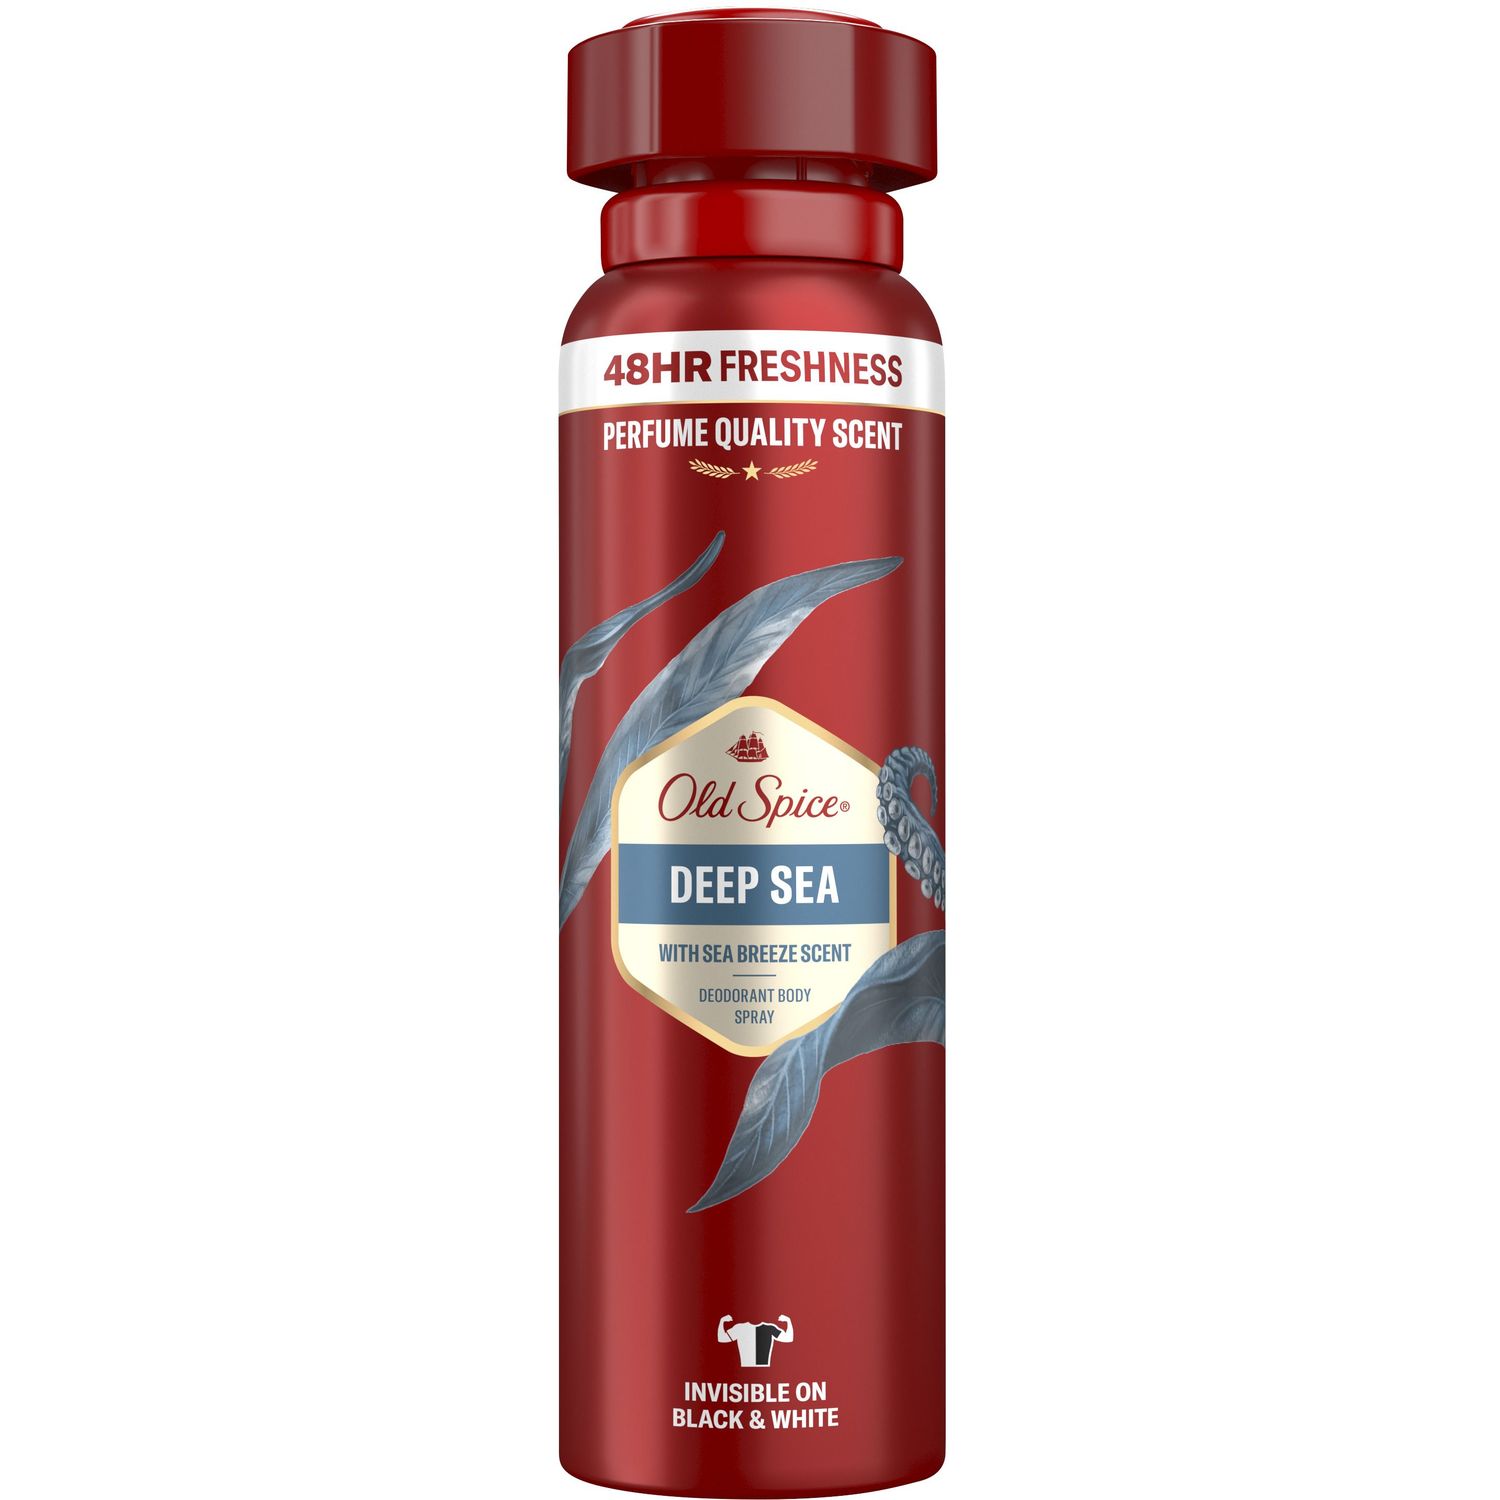 Аэрозольный дезодорант-антиперспирант Old Spice Deep sea с запахом океана, 150мл - фото 1